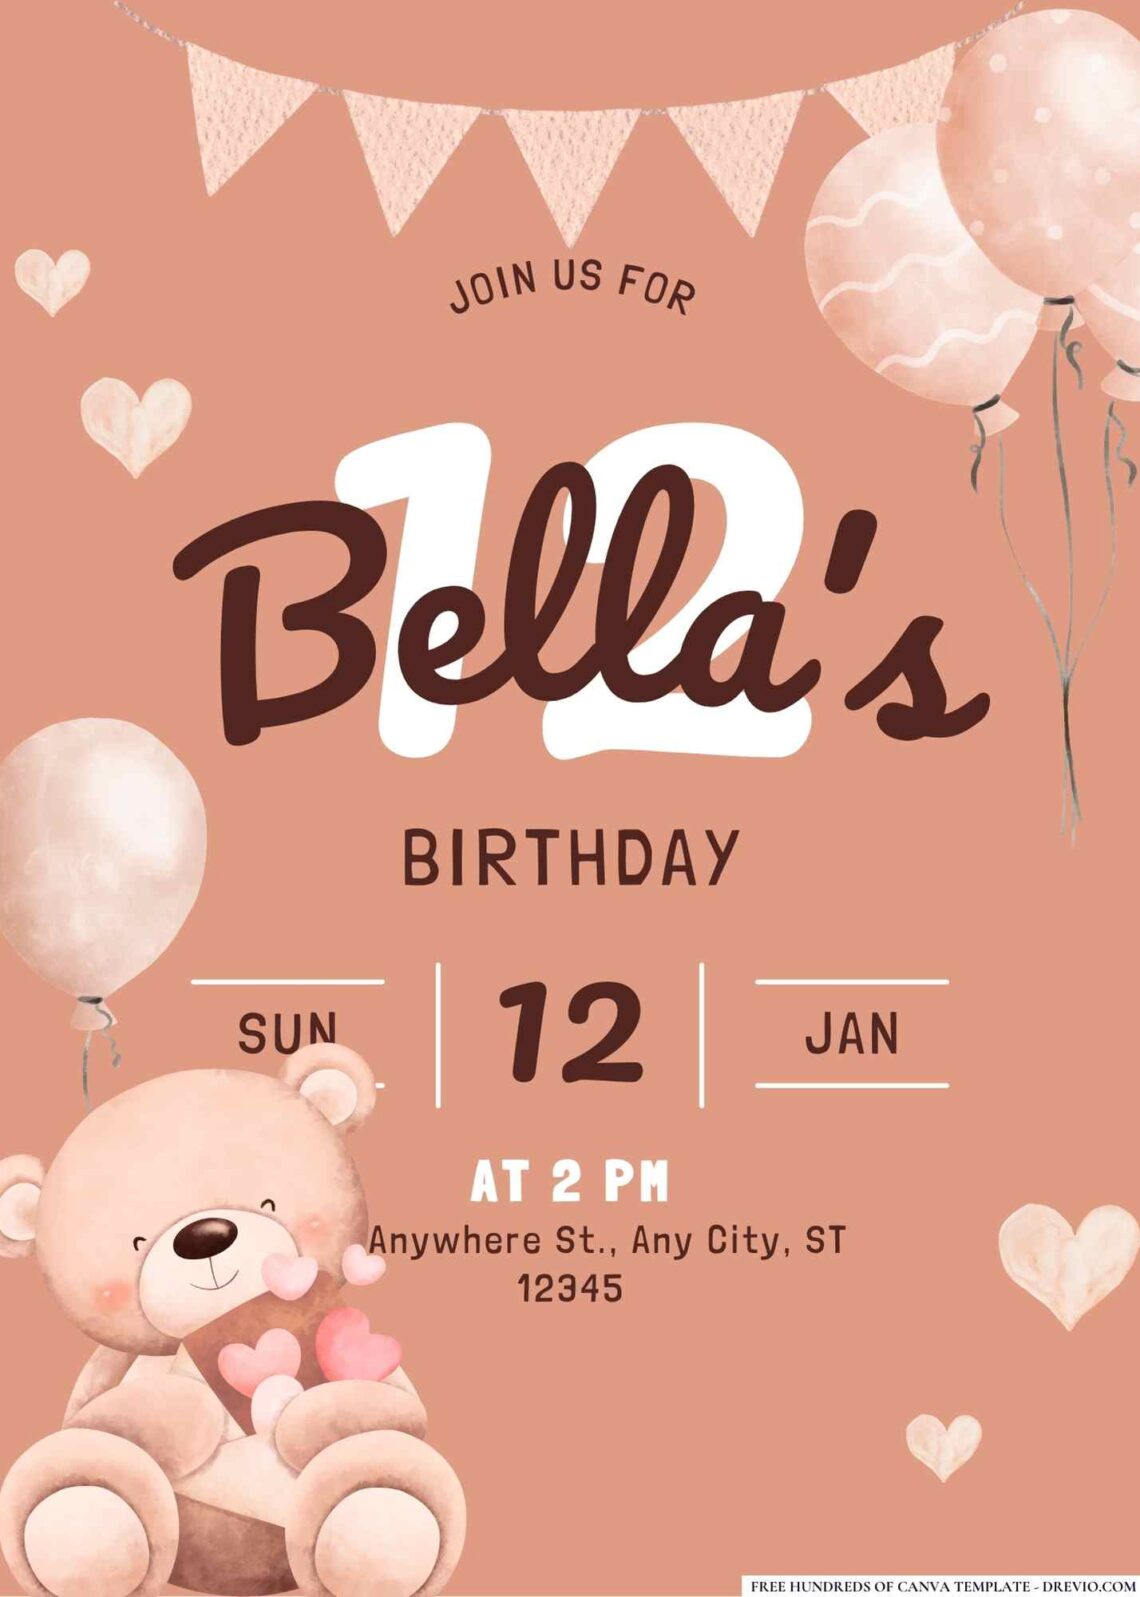 FREE Teddy Bear Birthday Invitations